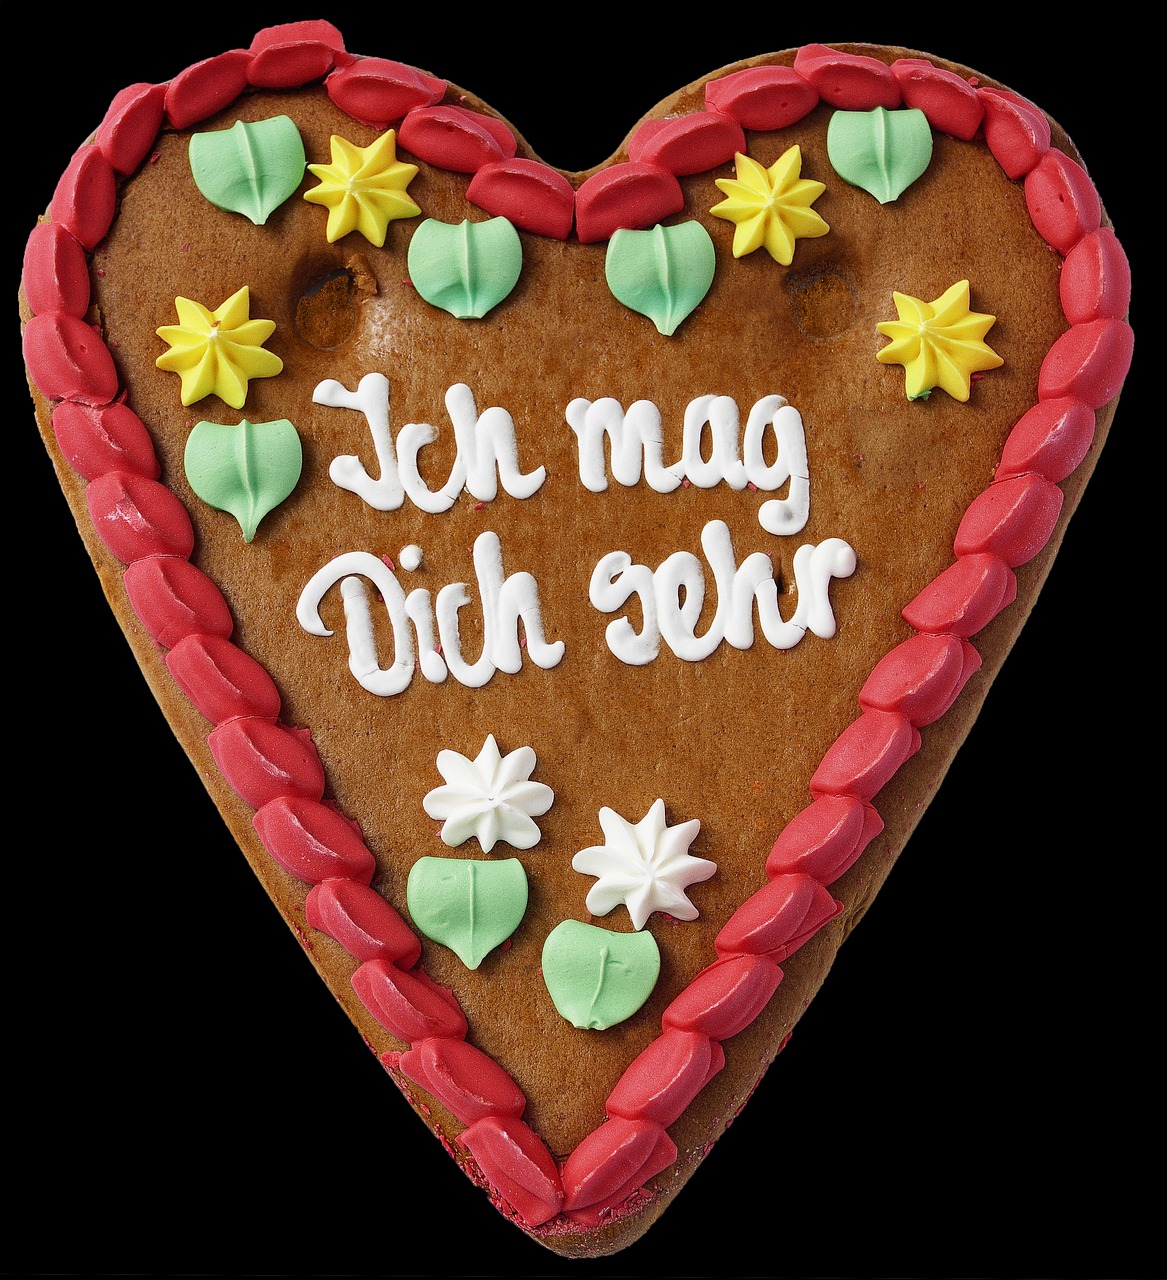 a close up of a heart shaped cake with icing, a photo, by Dietmar Damerau, folk art, packshot, hr ginger, motivational, german